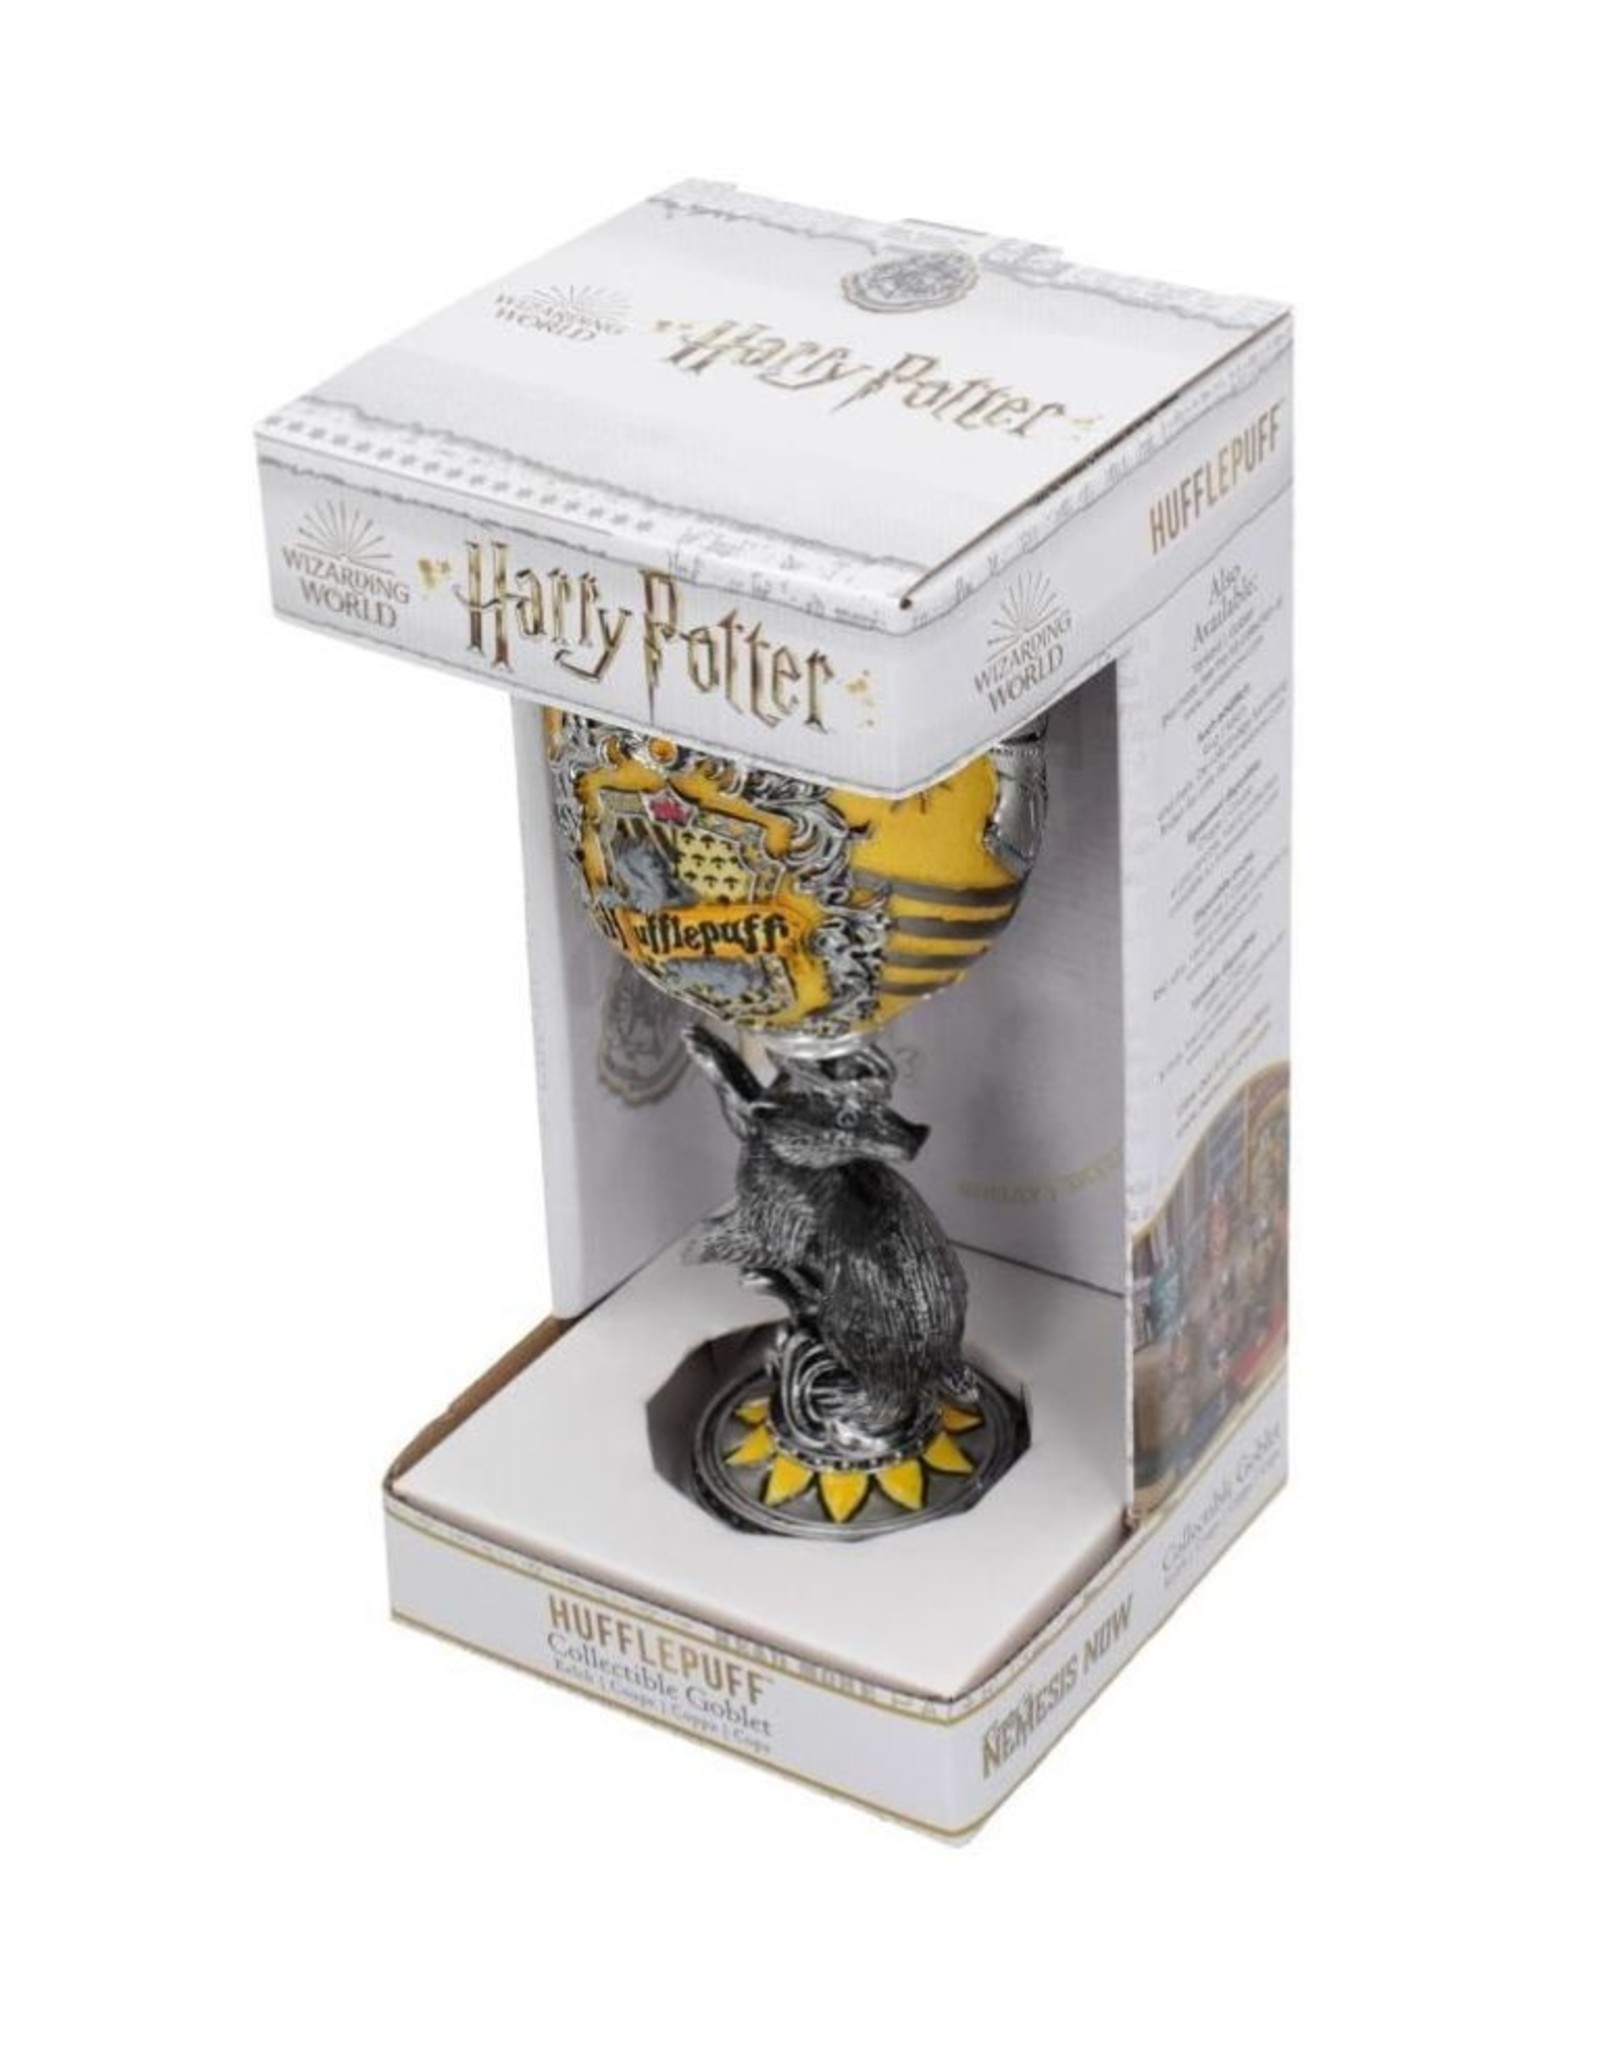 NemesisNow Giftware & Lifestyle - Harry Potter Hufflepuff Collectible Kelk